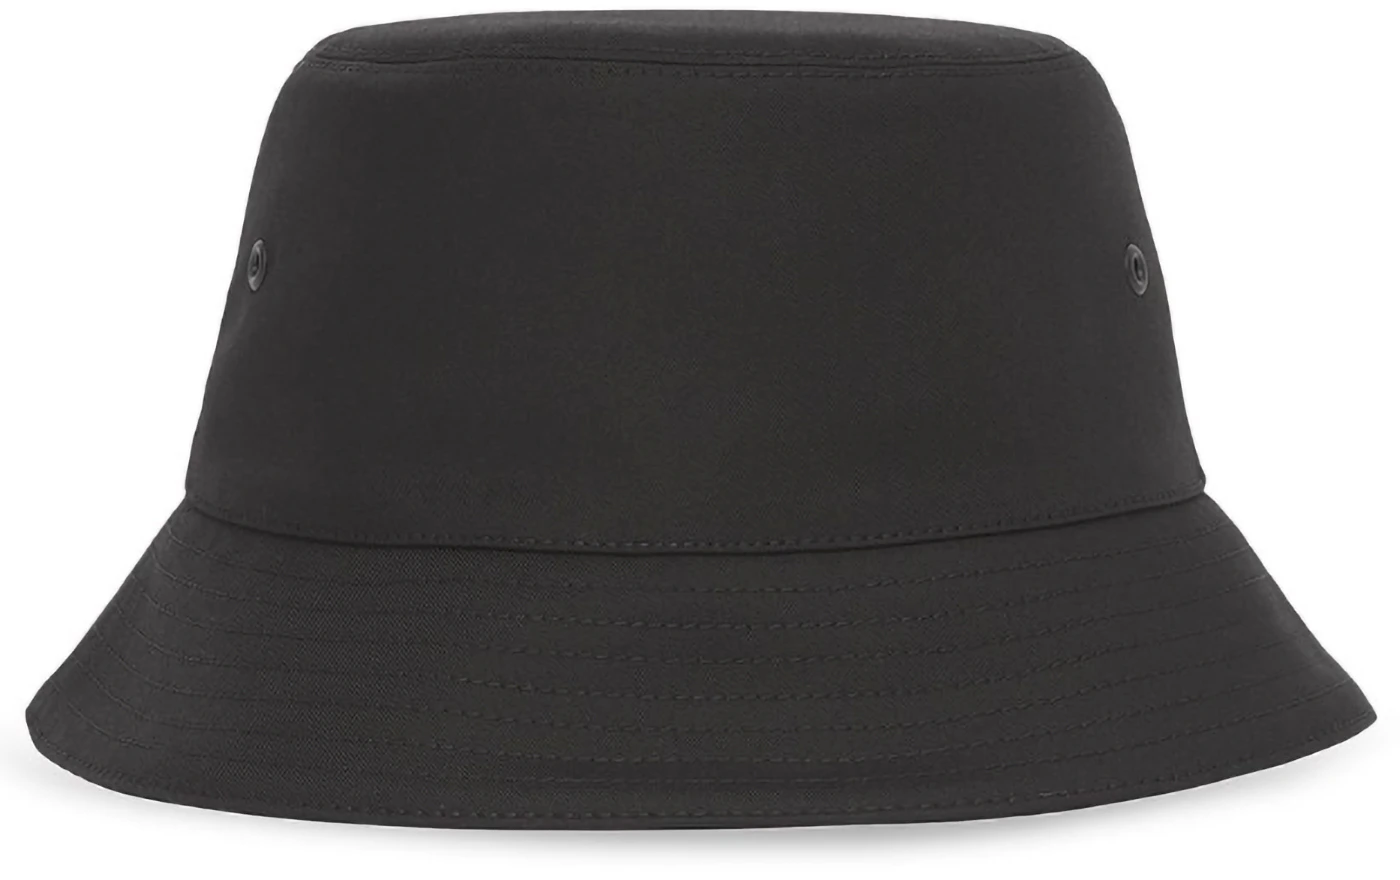 Burberry Black Logo Patch Bucket Hat Black Men's - US